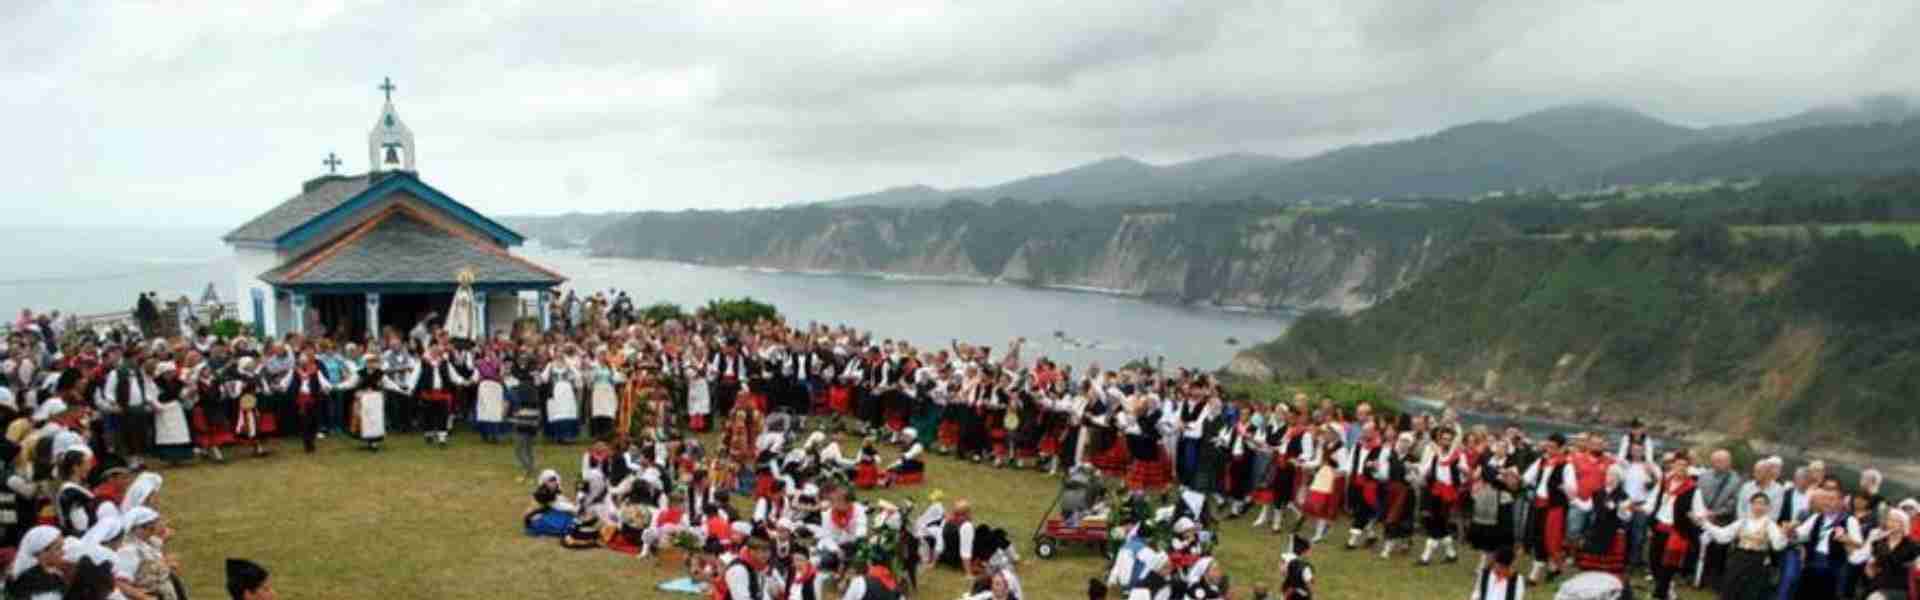 Traditional festivals in Asturias - La Regalina